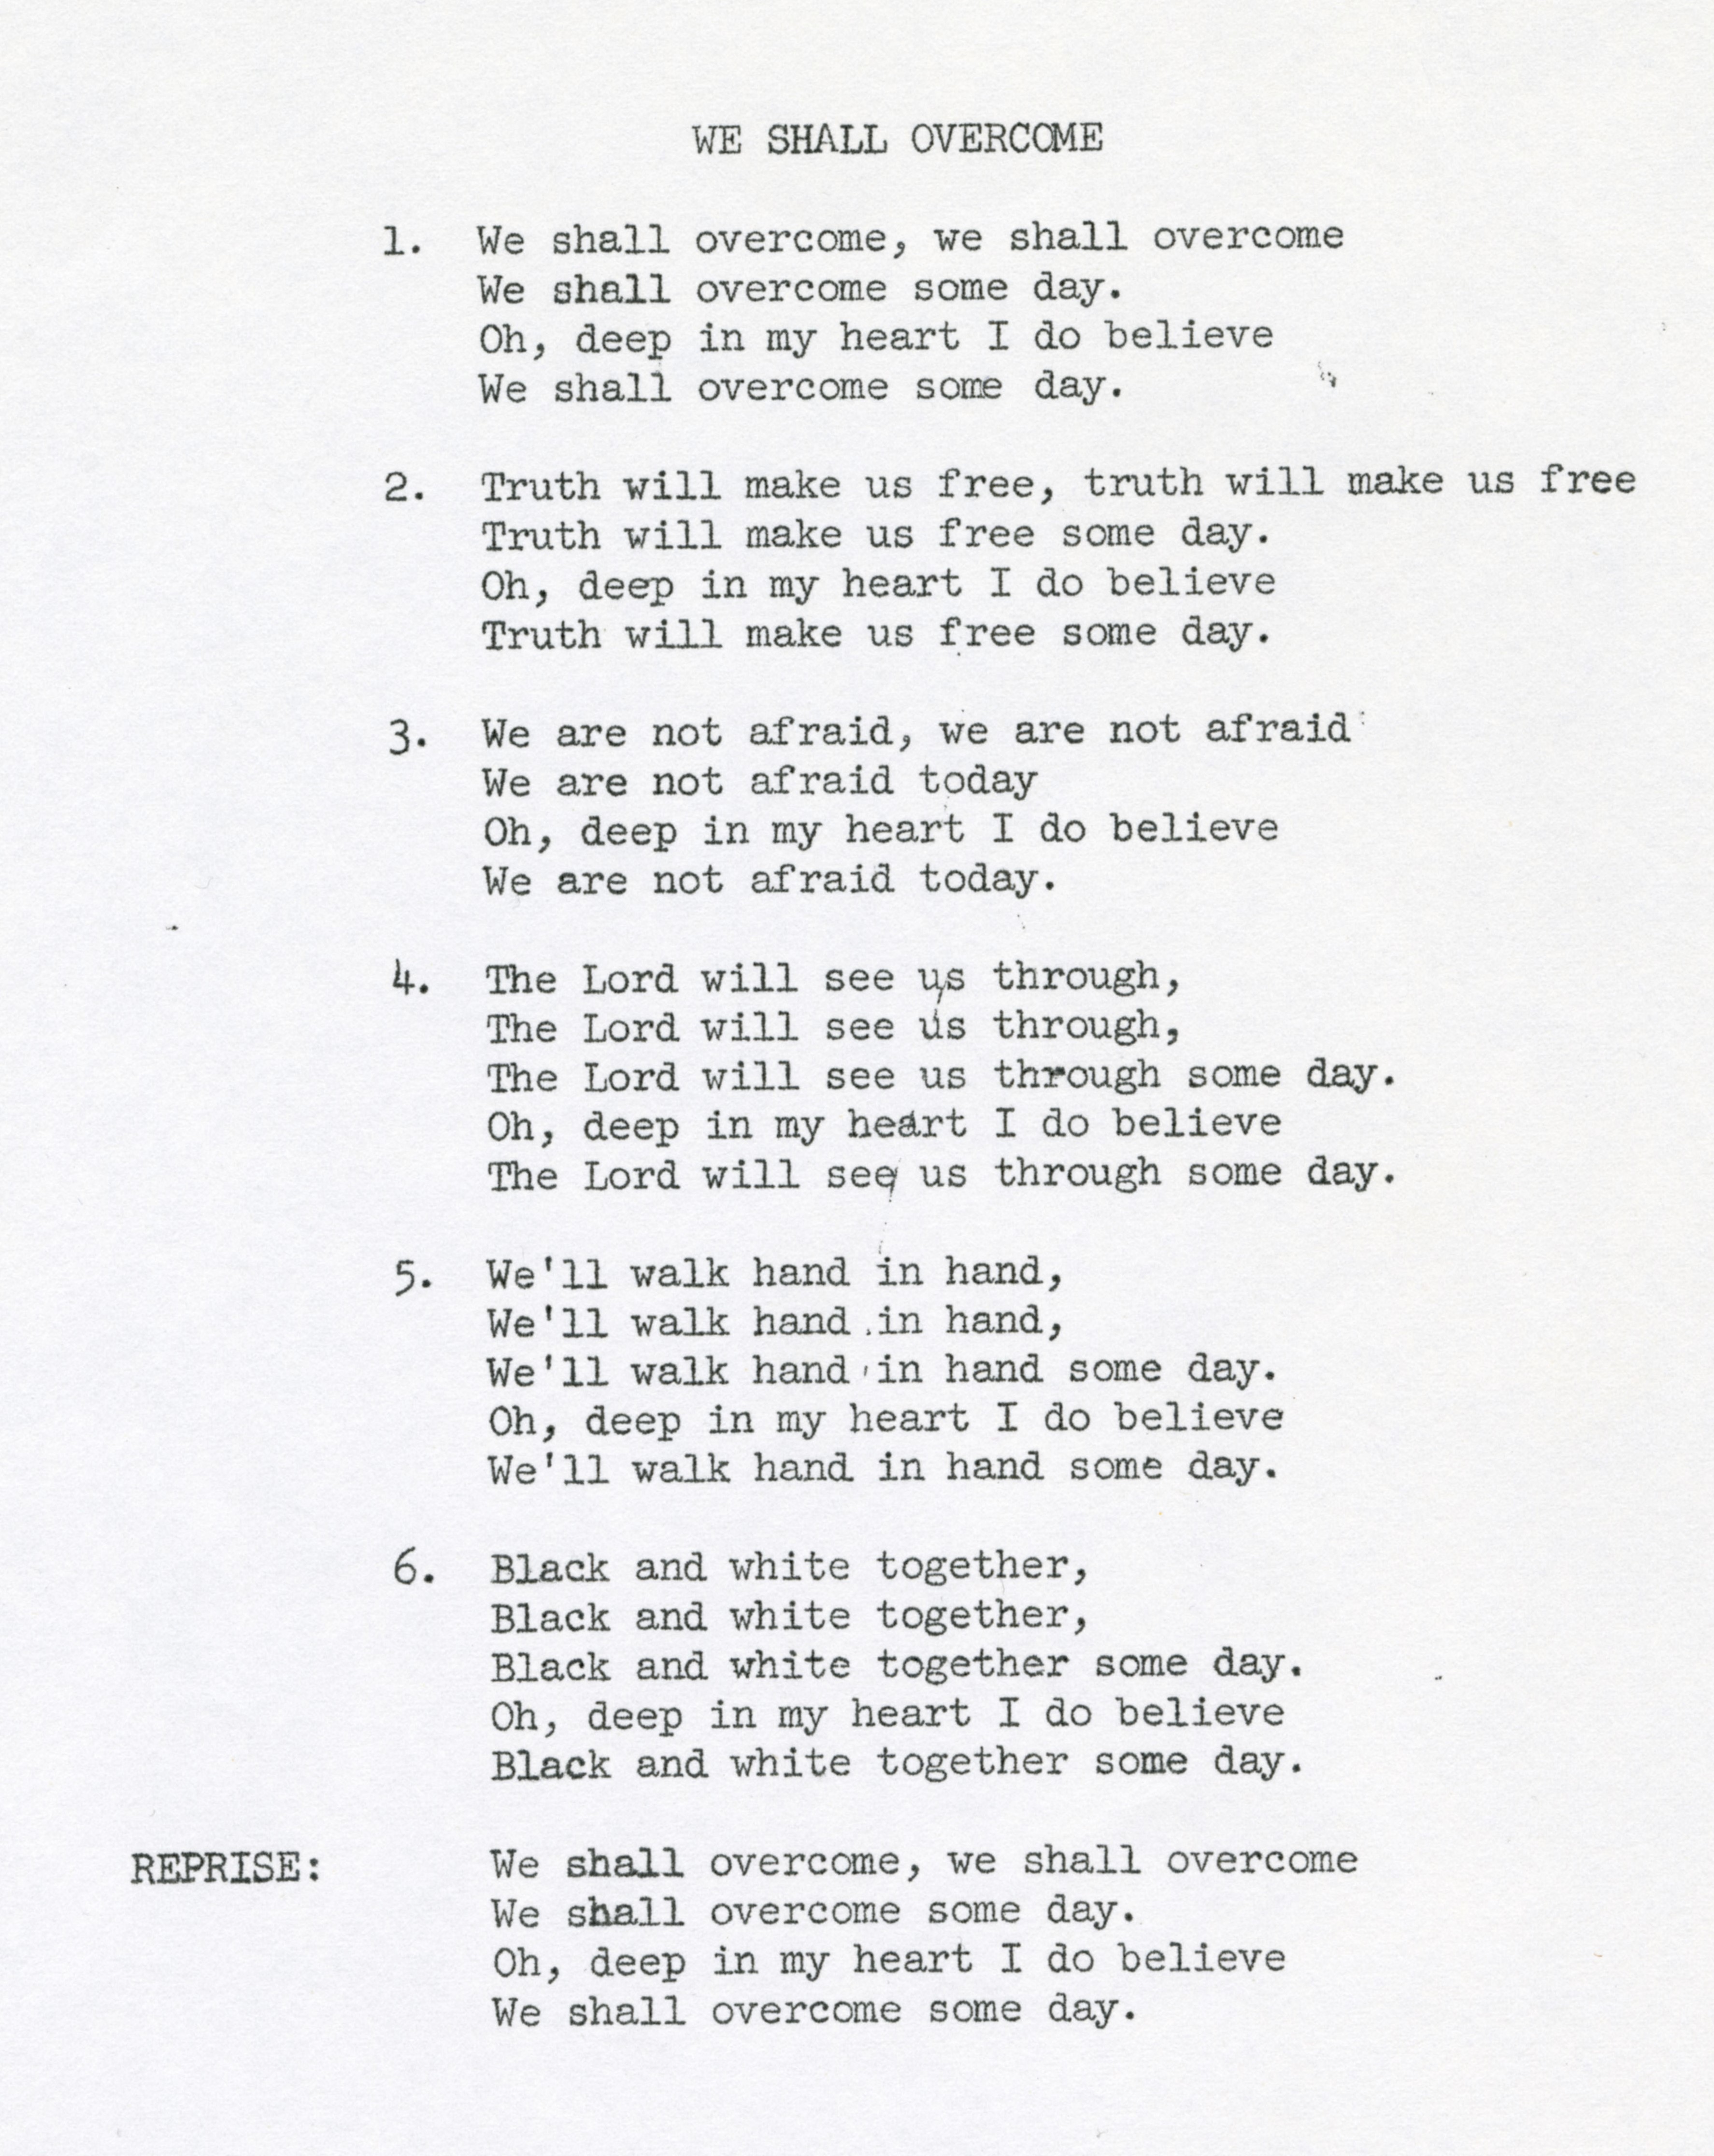 Lyrics to "We Shall Overcome" (Gilder Lehrman Institute, GLC09732.06)